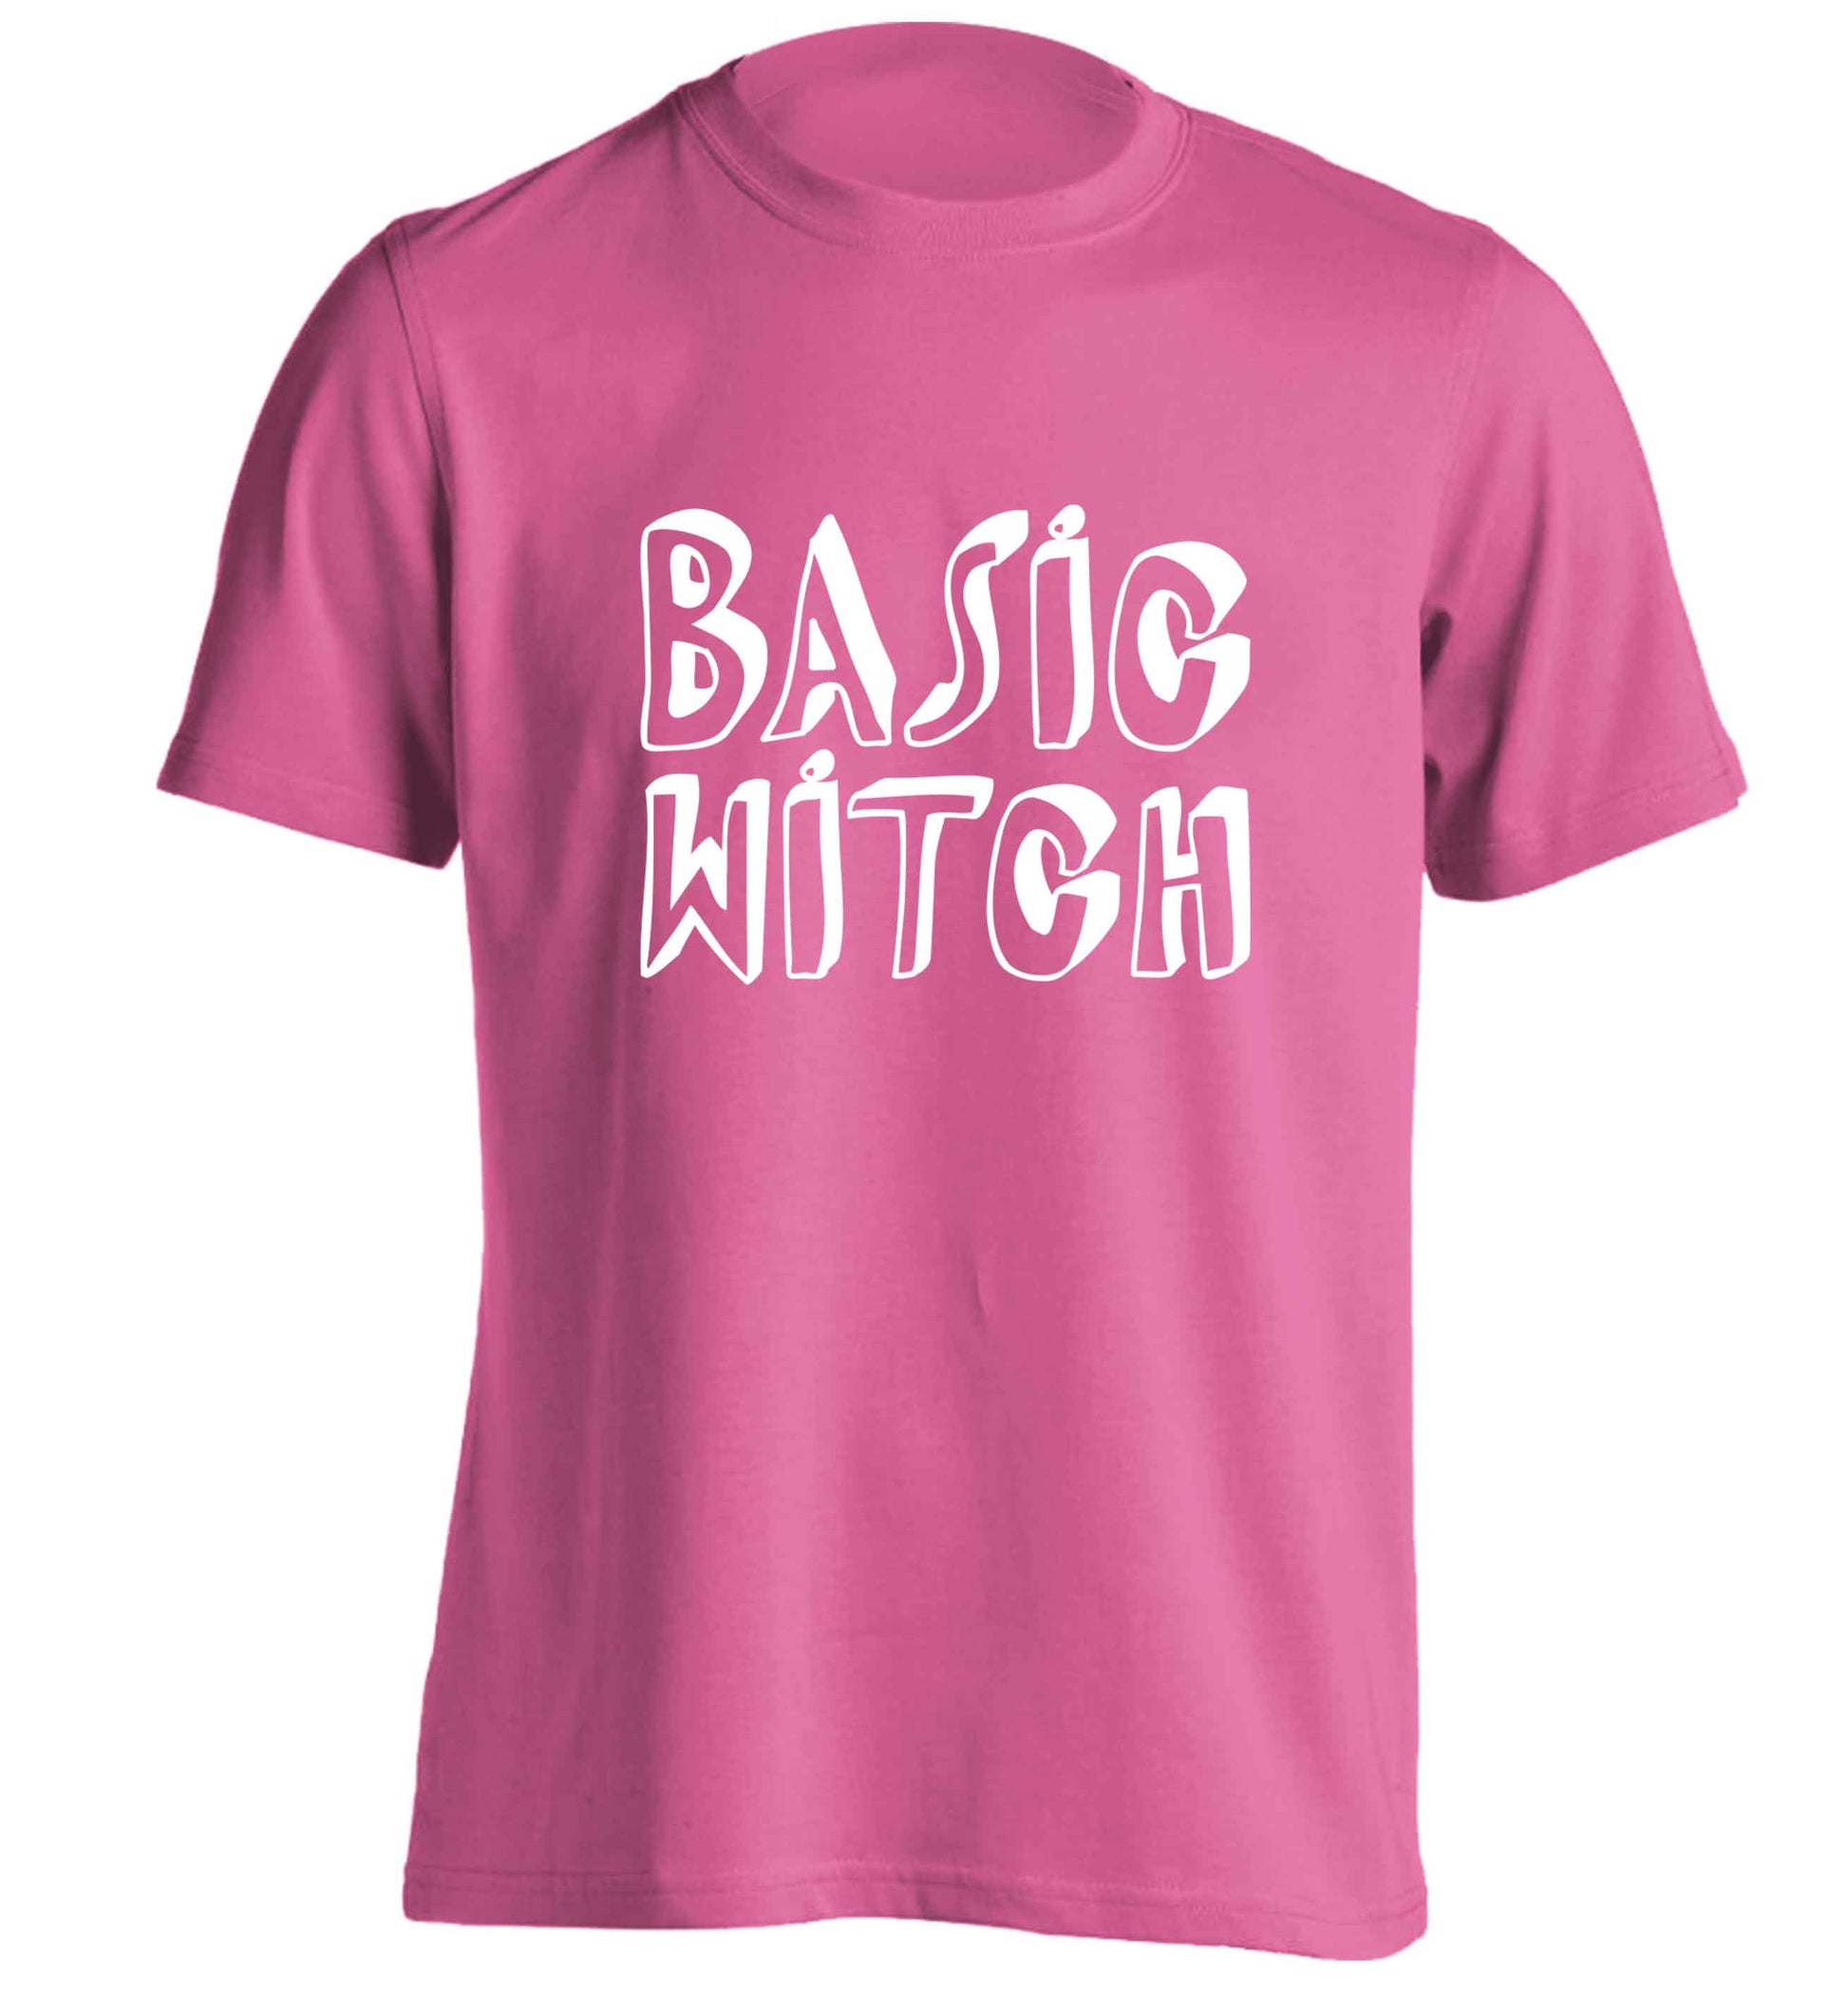 Basic witch adults unisex pink Tshirt 2XL